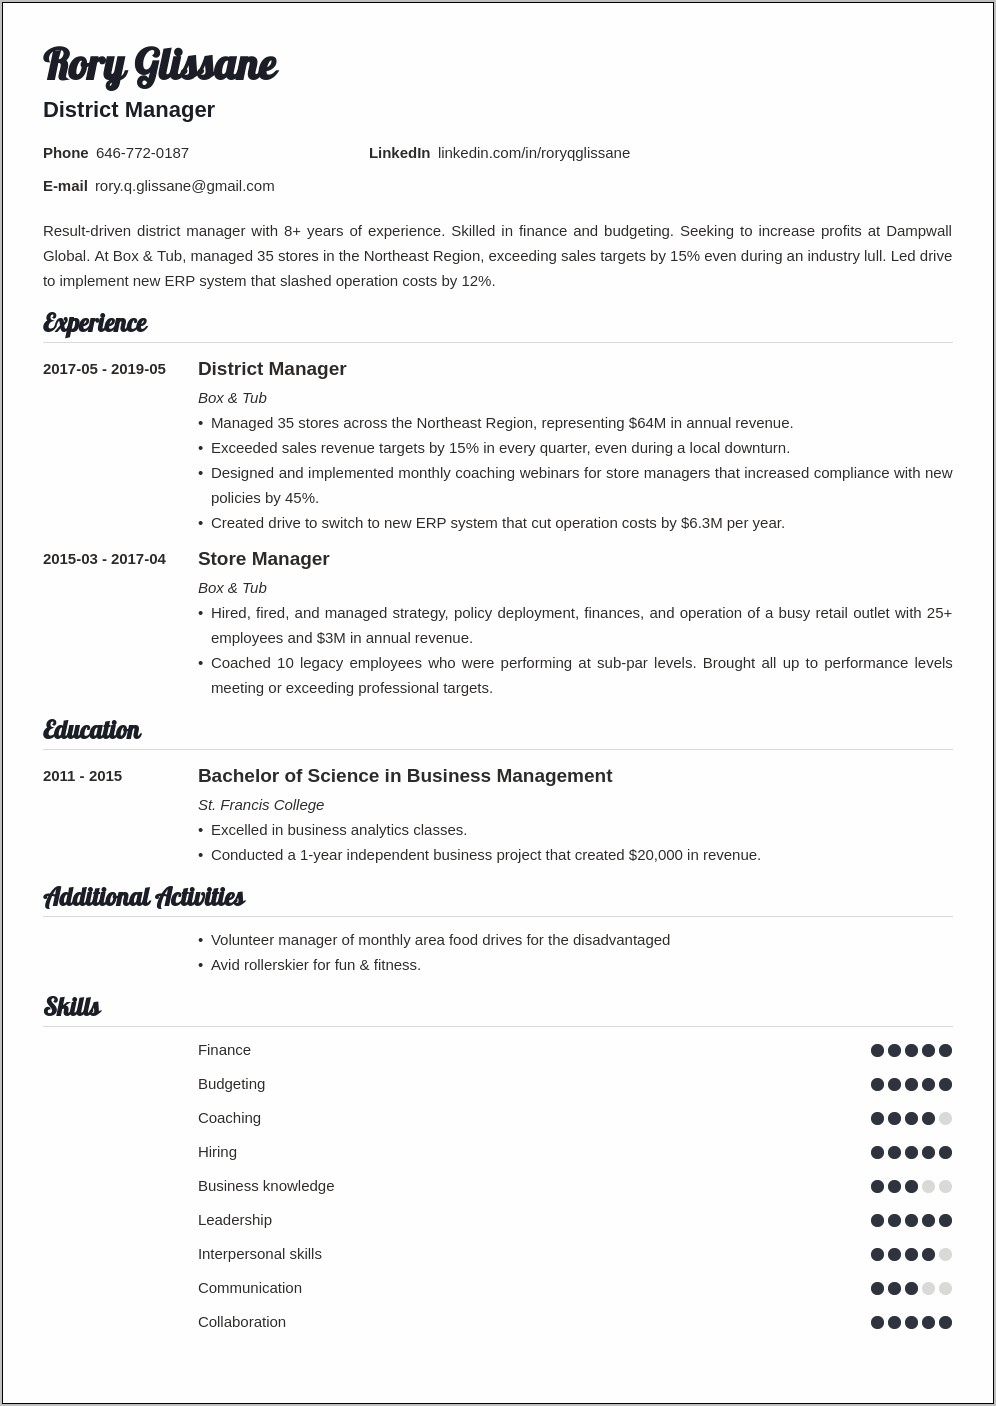 Sample Resume For Restaurant District Manager